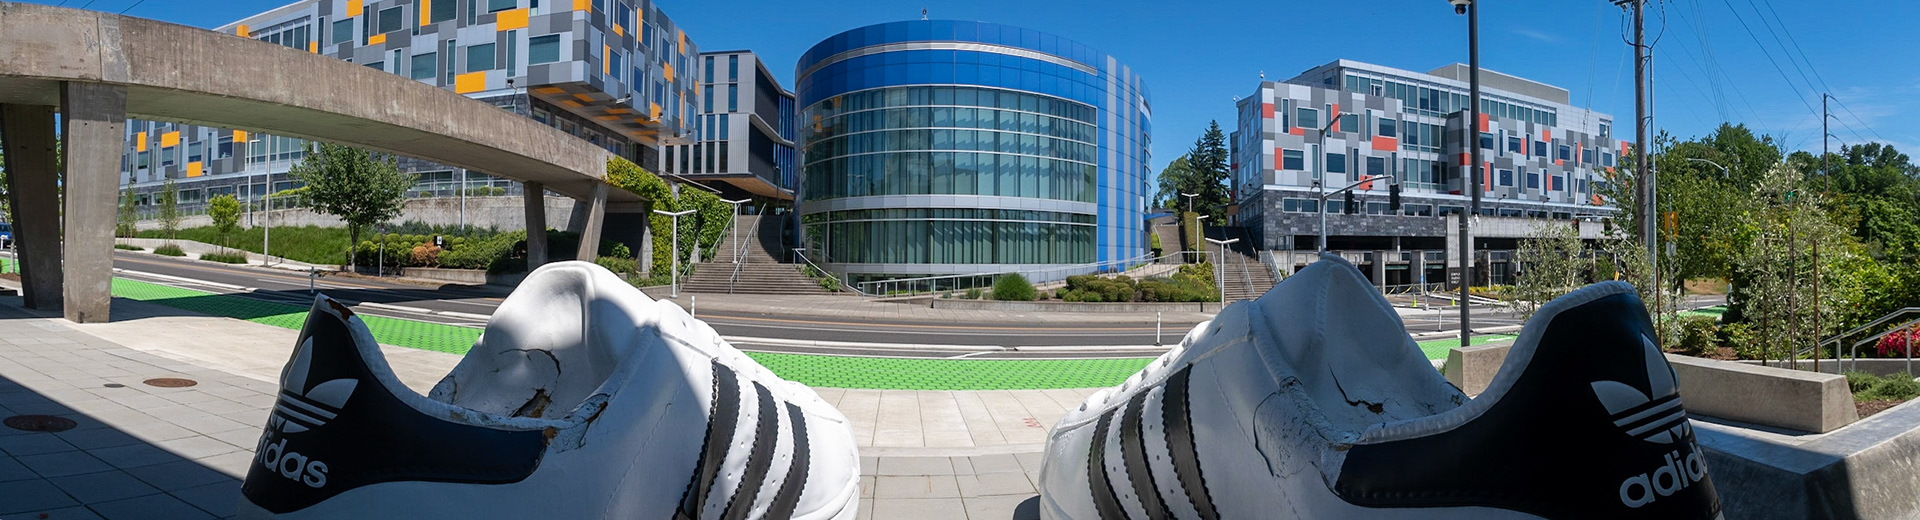 kapsel kubiske Planet Pacific Northwest Photowalks - 5/29/2021 Adidas North American Headquarters  Walk 2